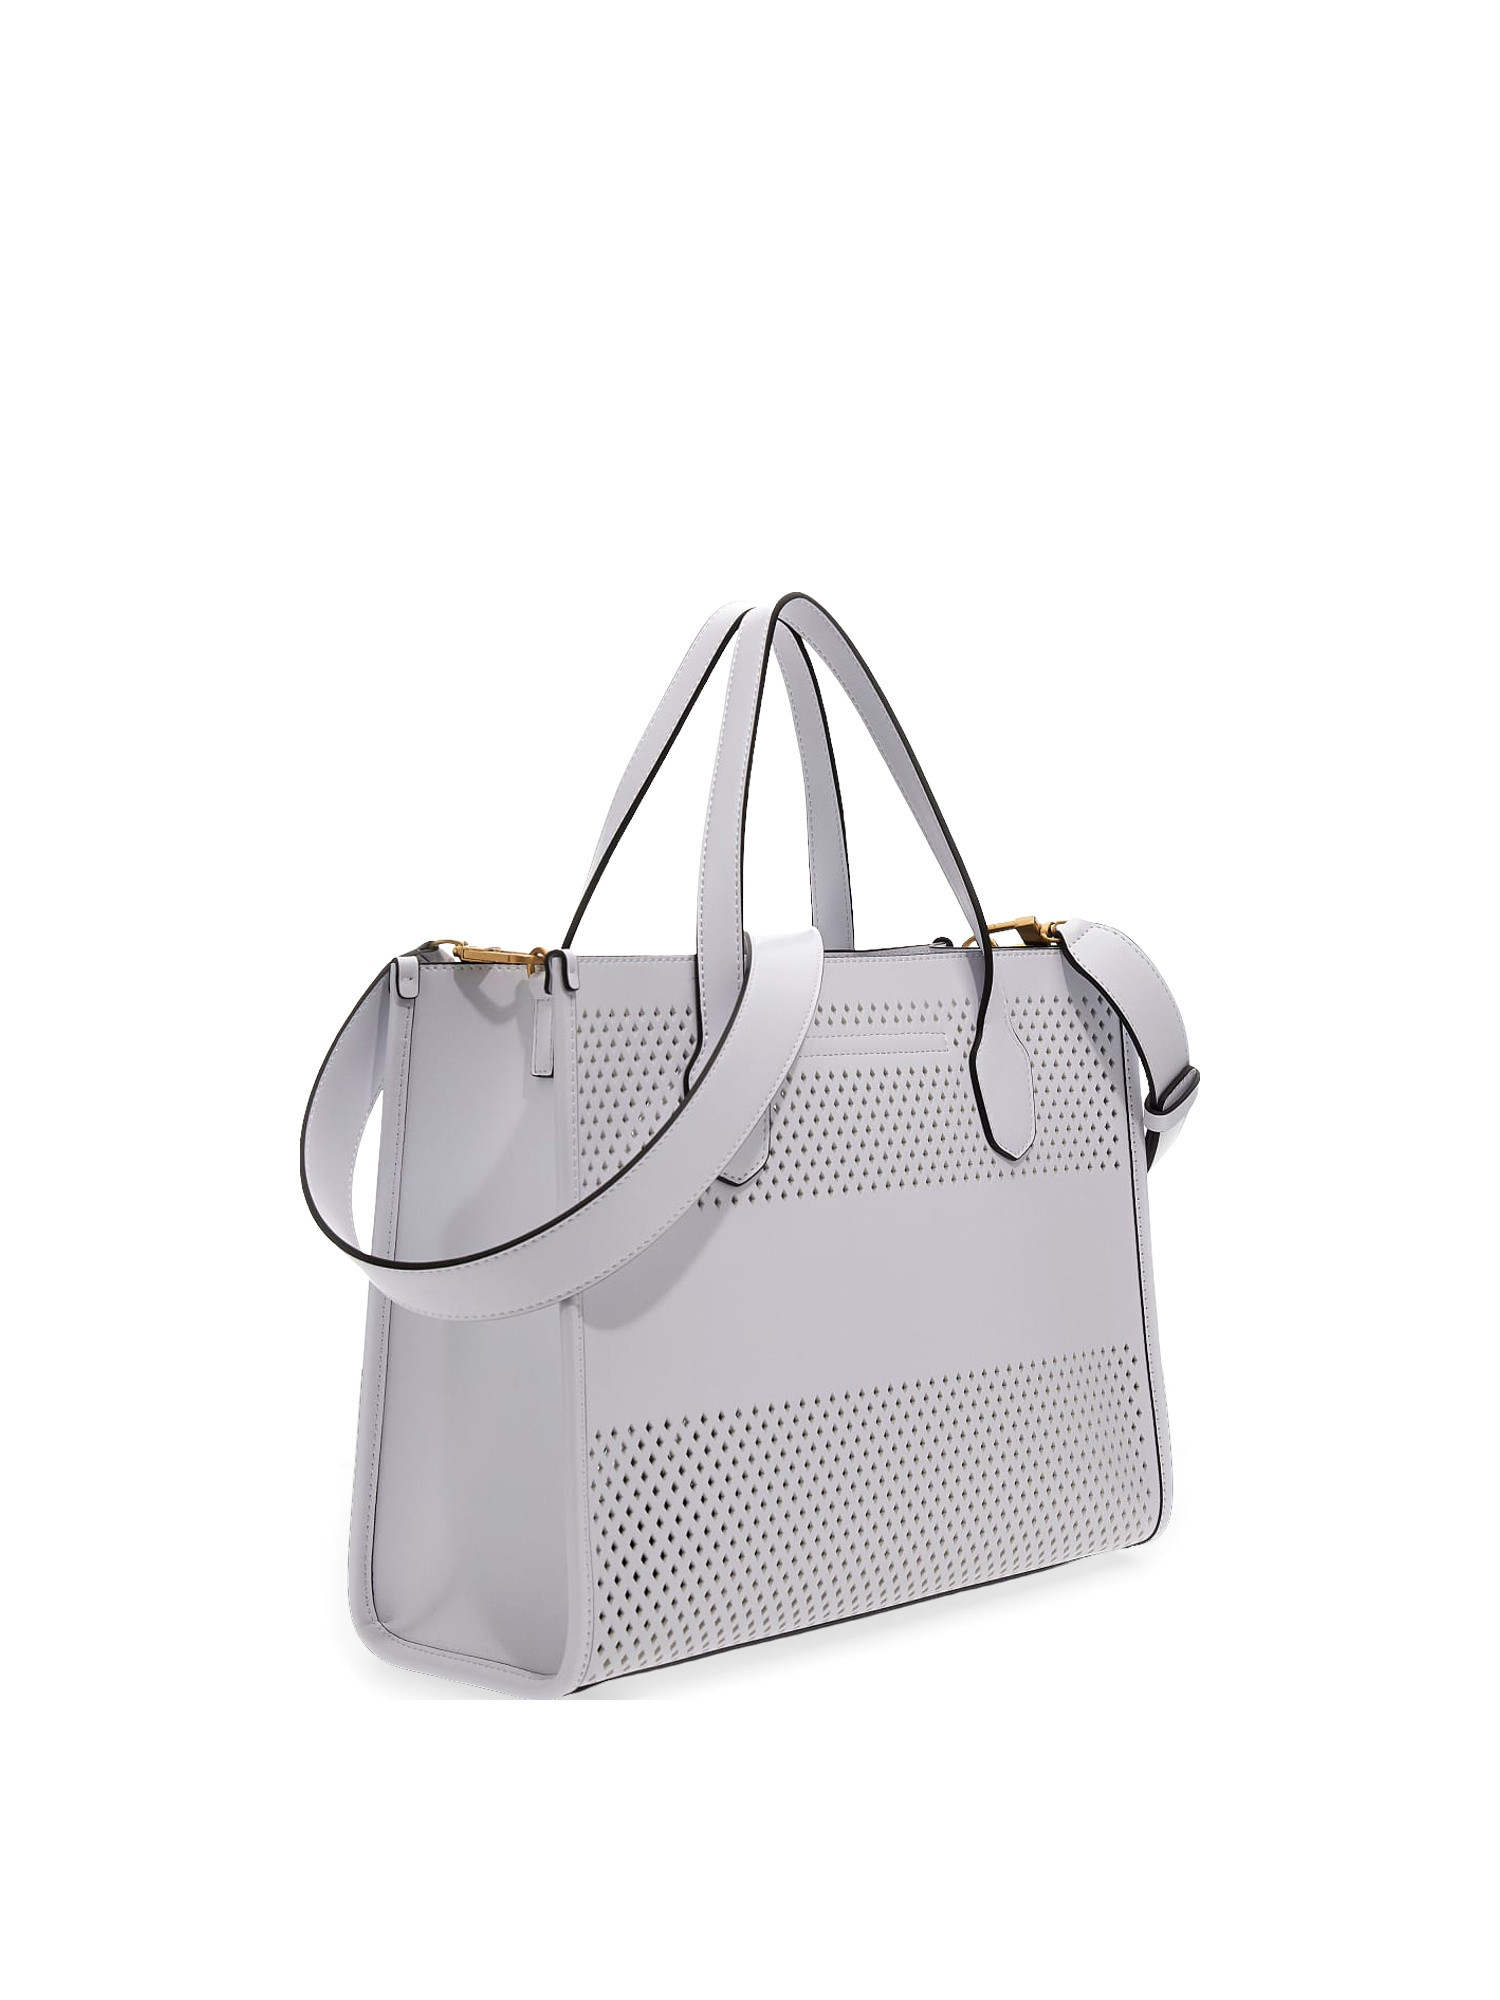 Guess - Katey perforated handbag, White, large image number 1